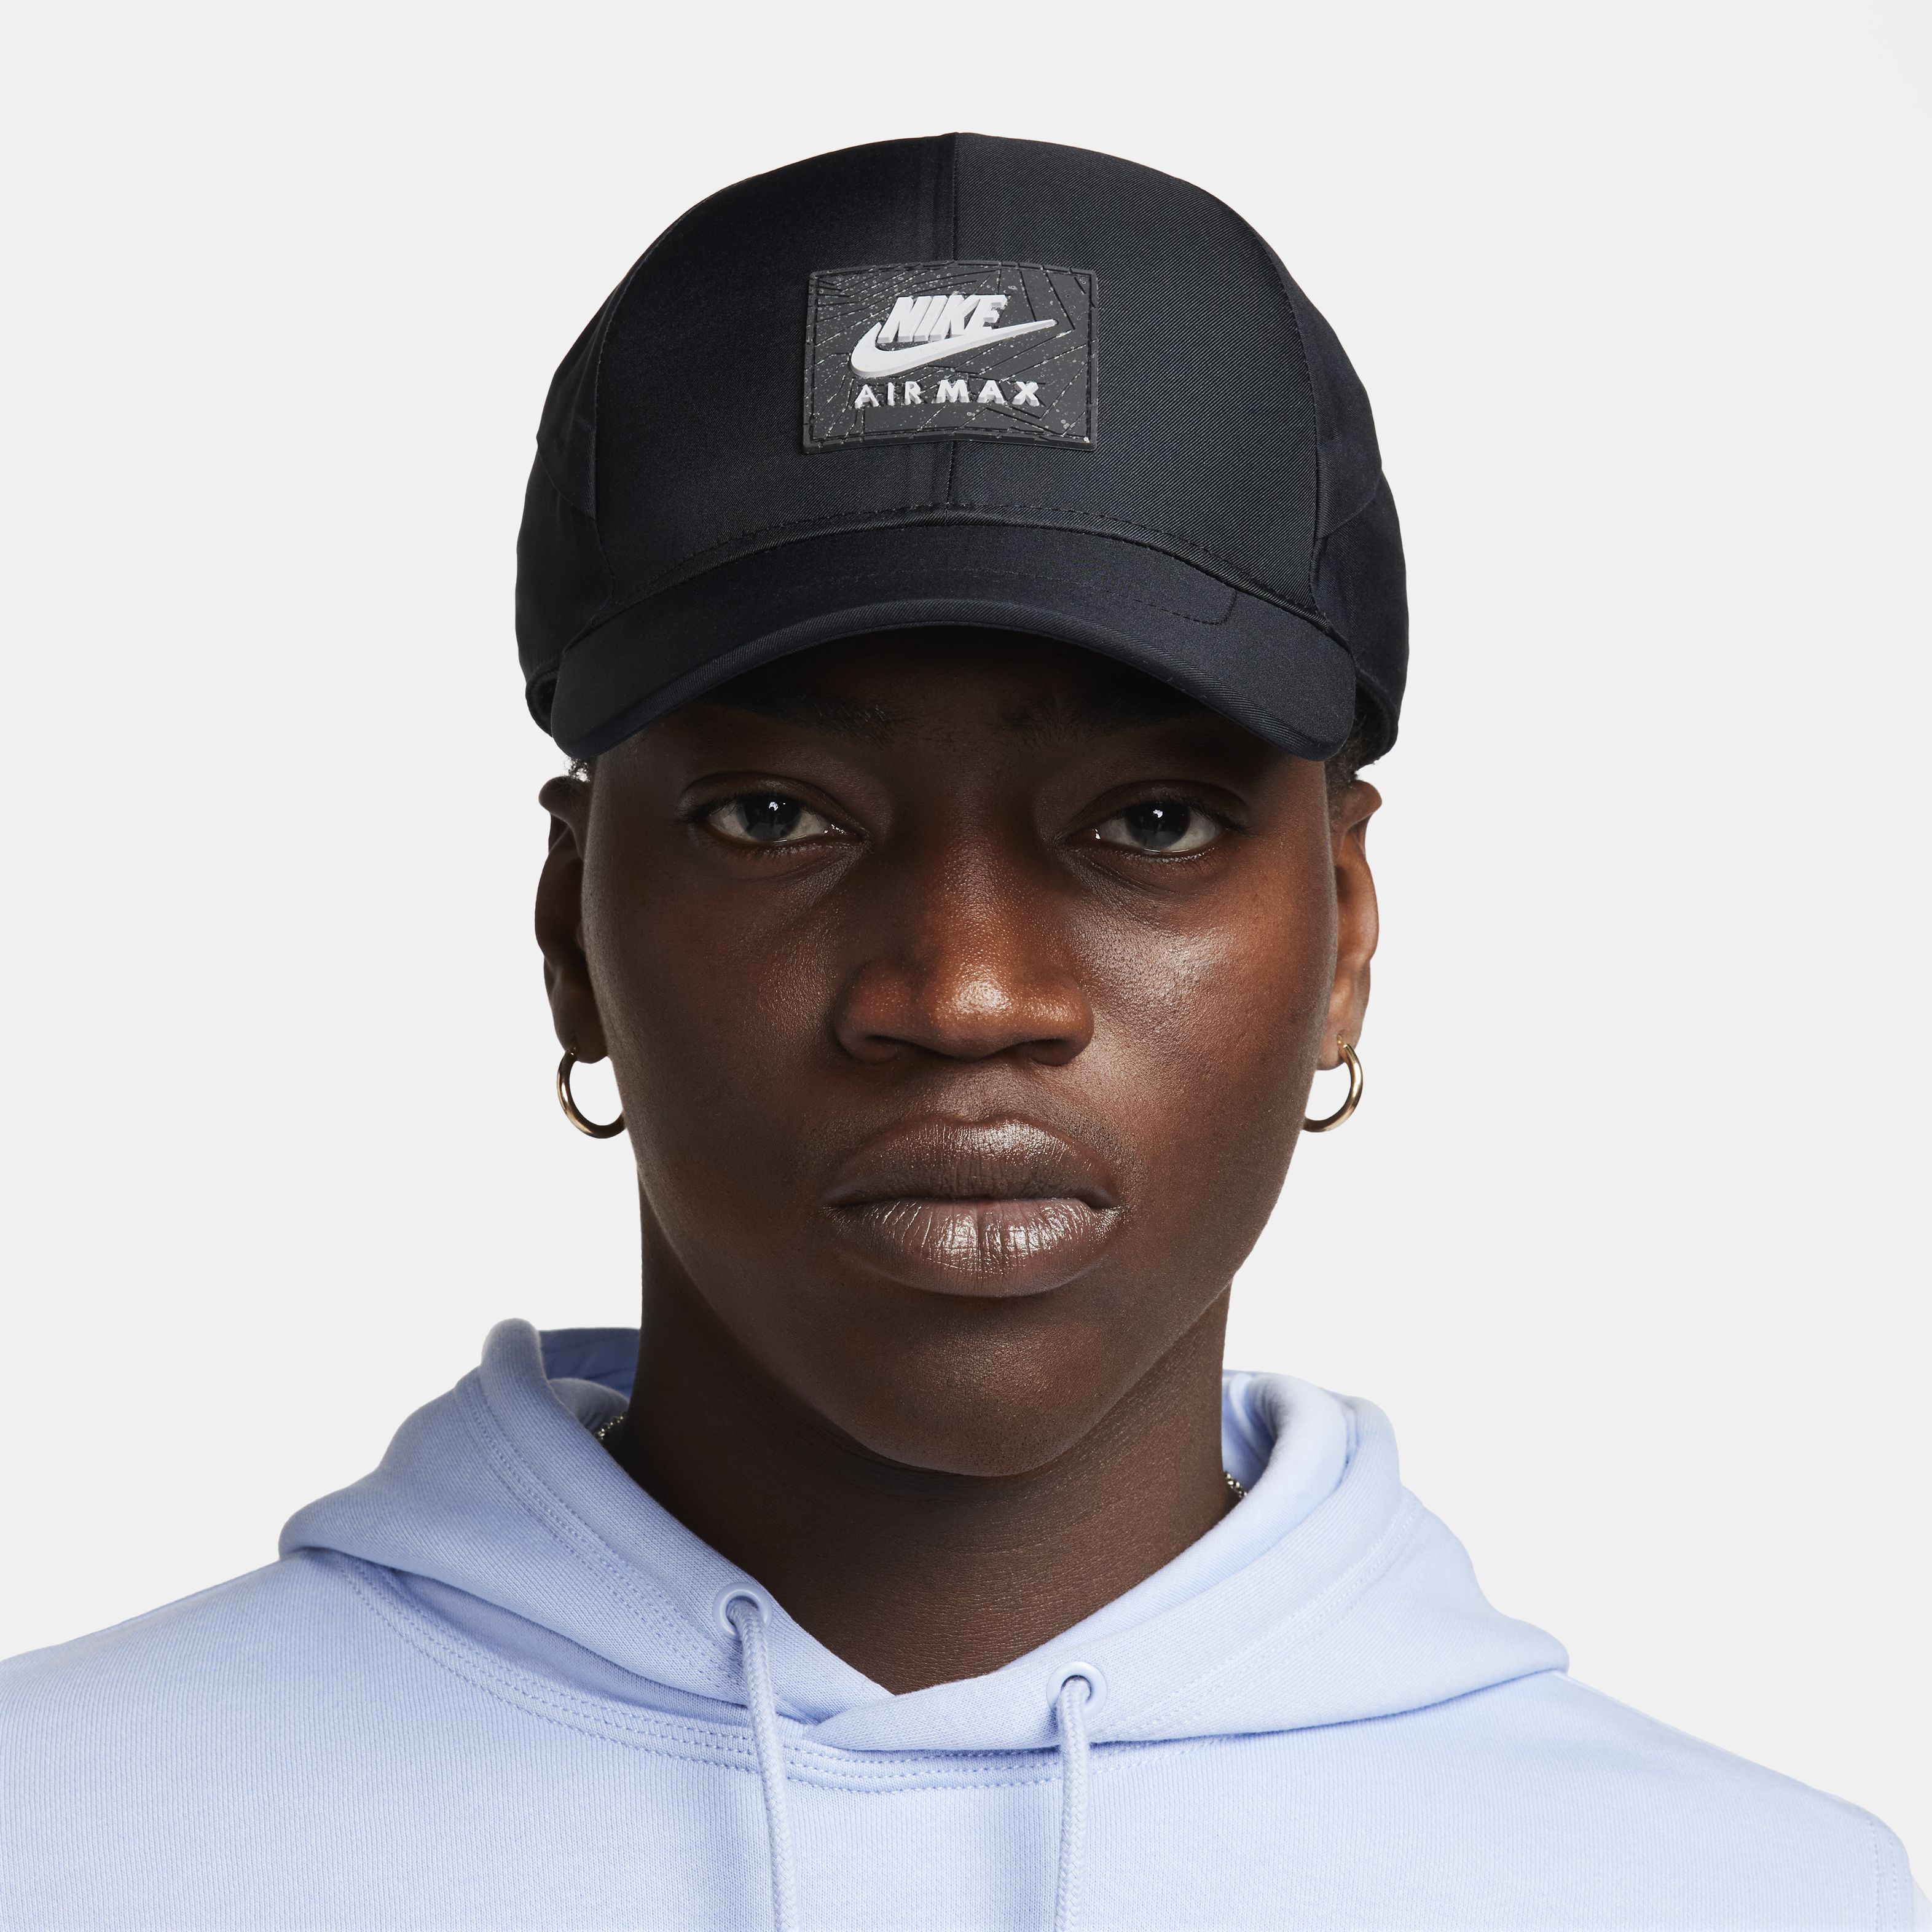 Nike Club Cap